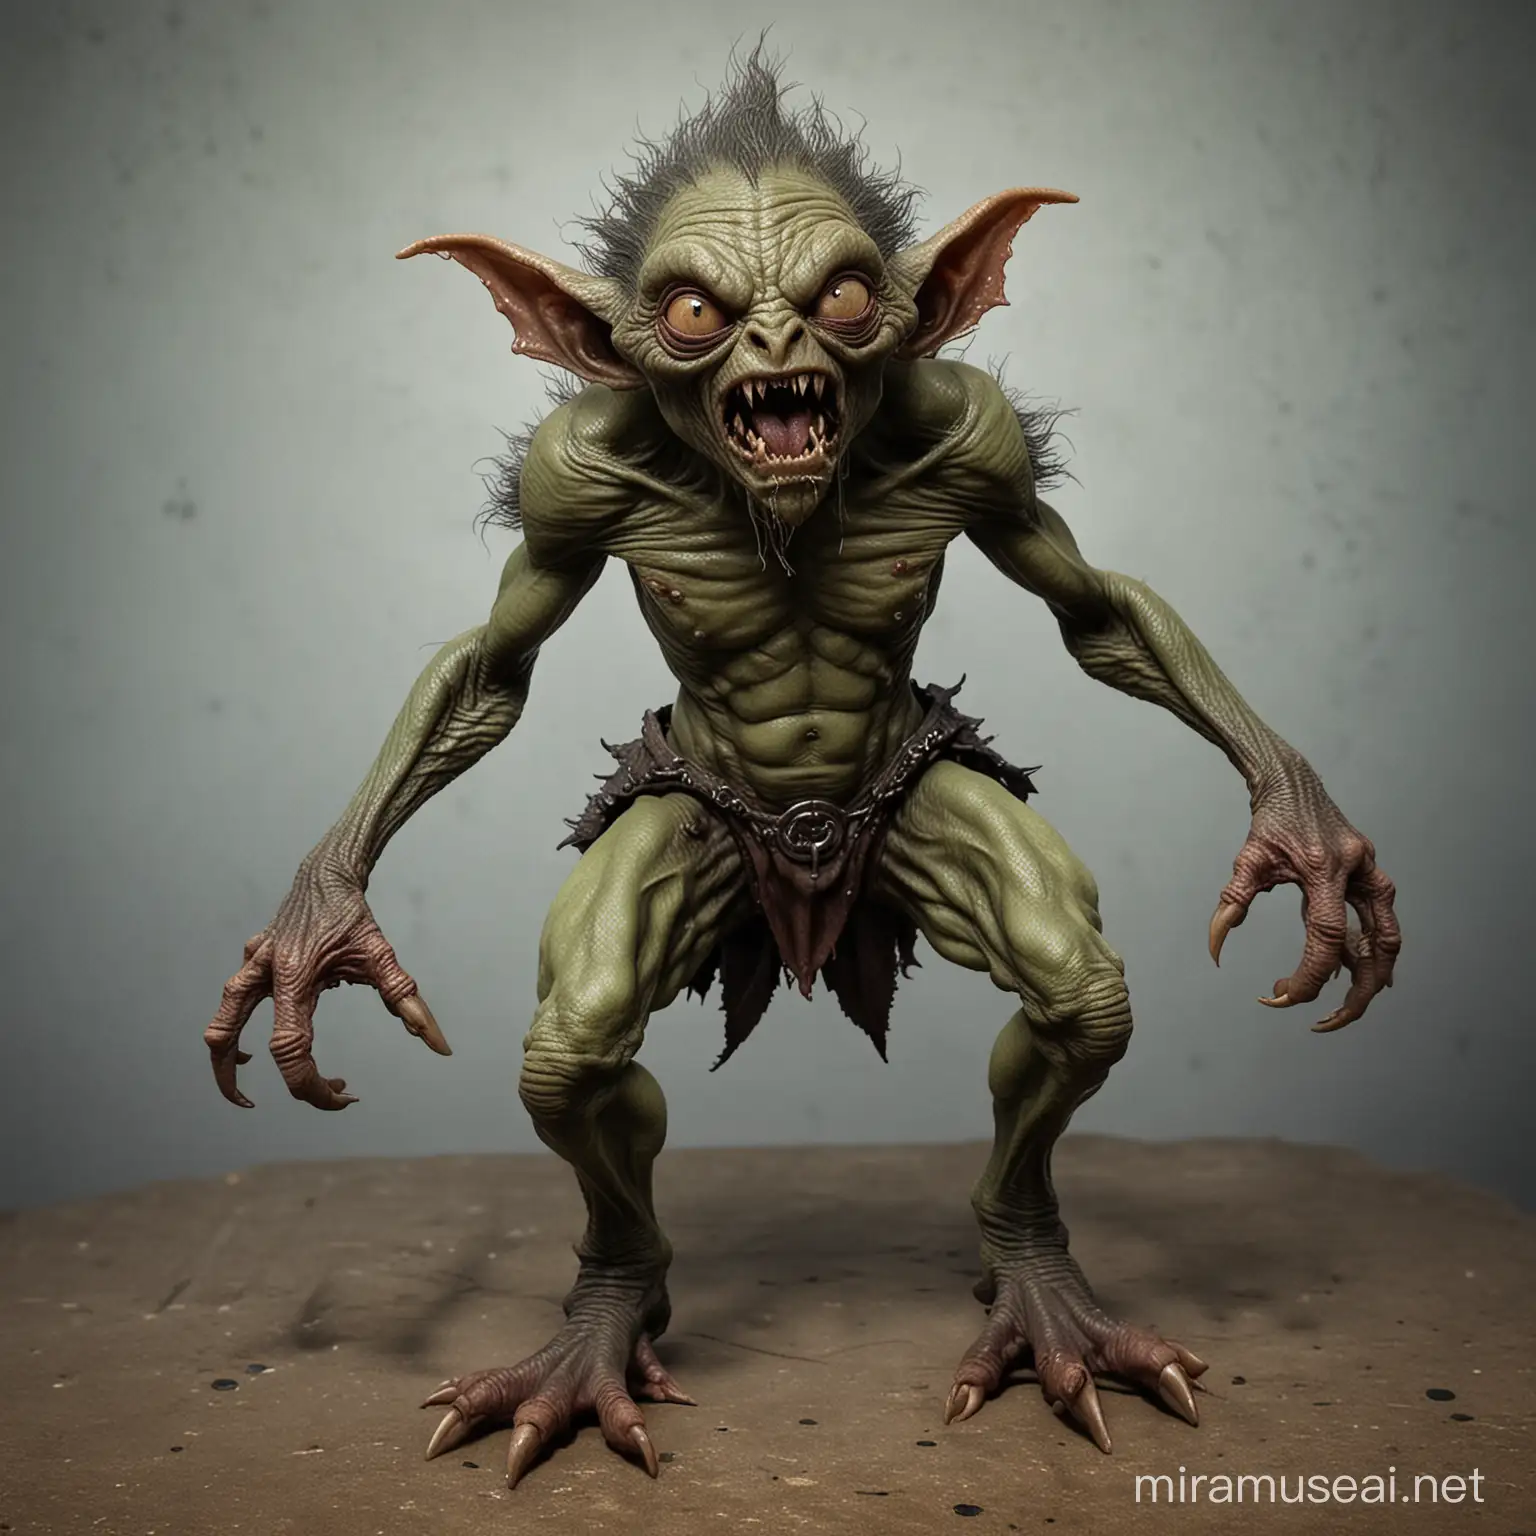 Disturbing Lovecraftian Crotch Goblin Emerges from Darkness